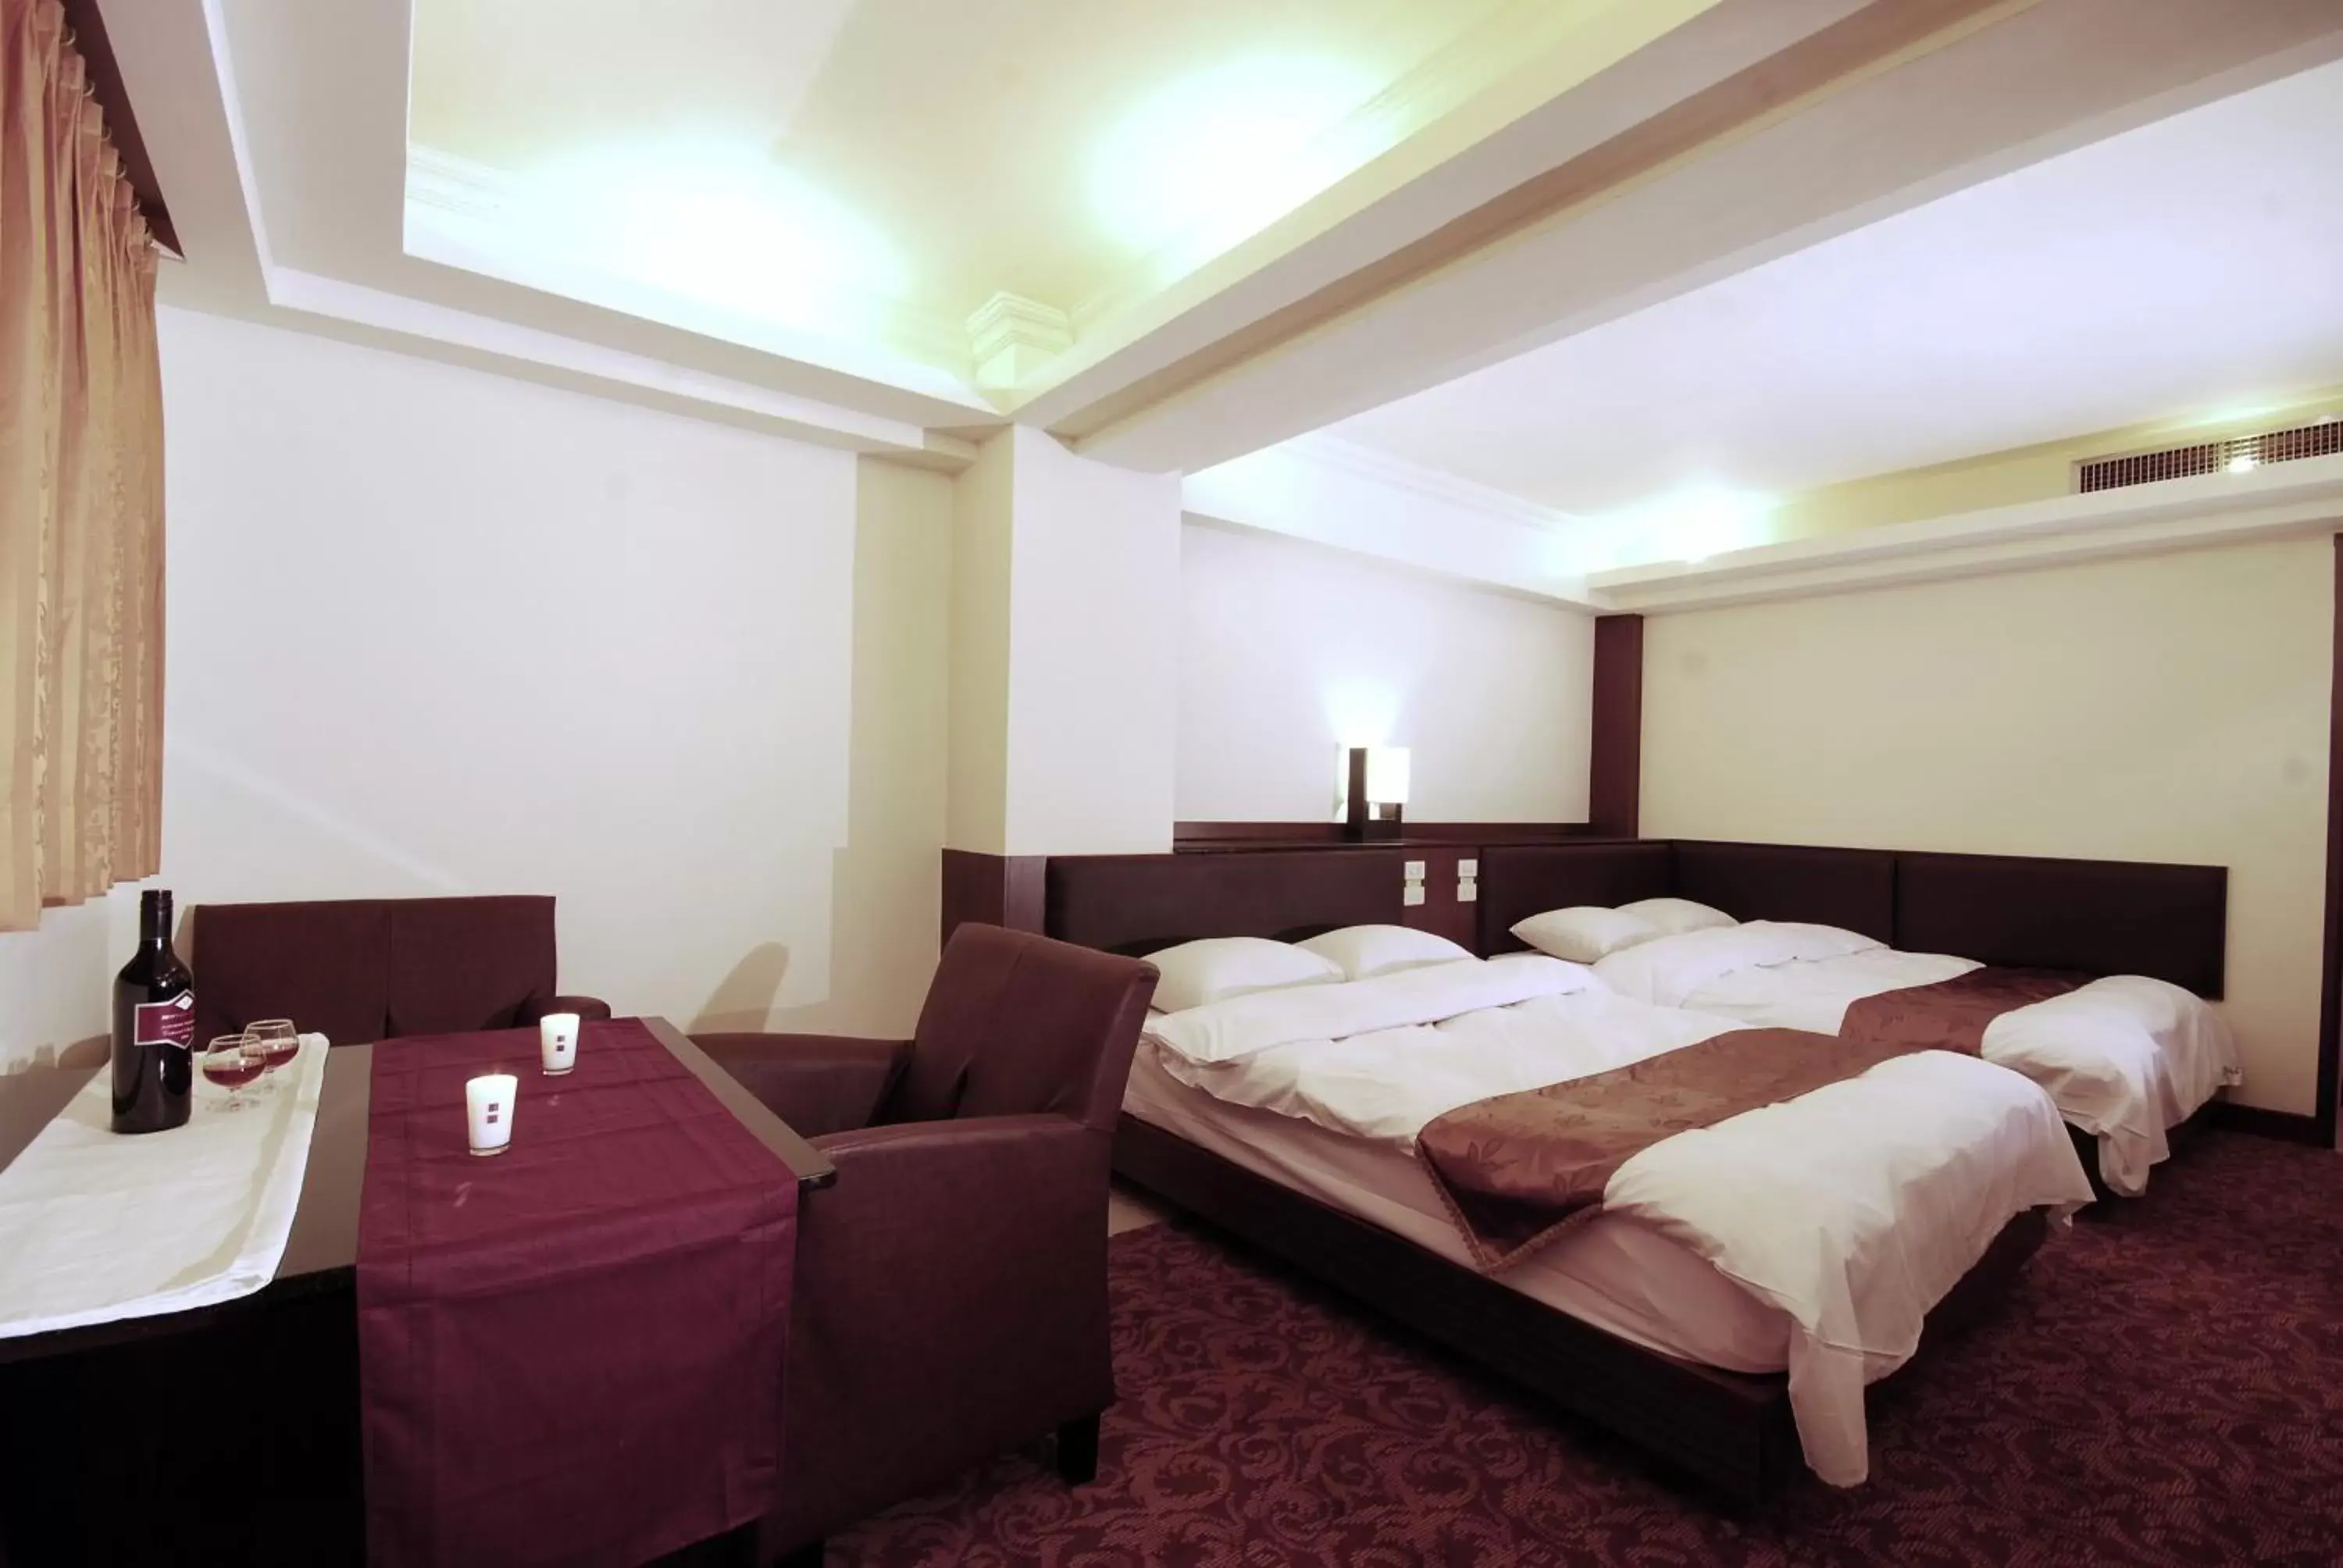 bunk bed, Room Photo in The Enterpriser Hotel